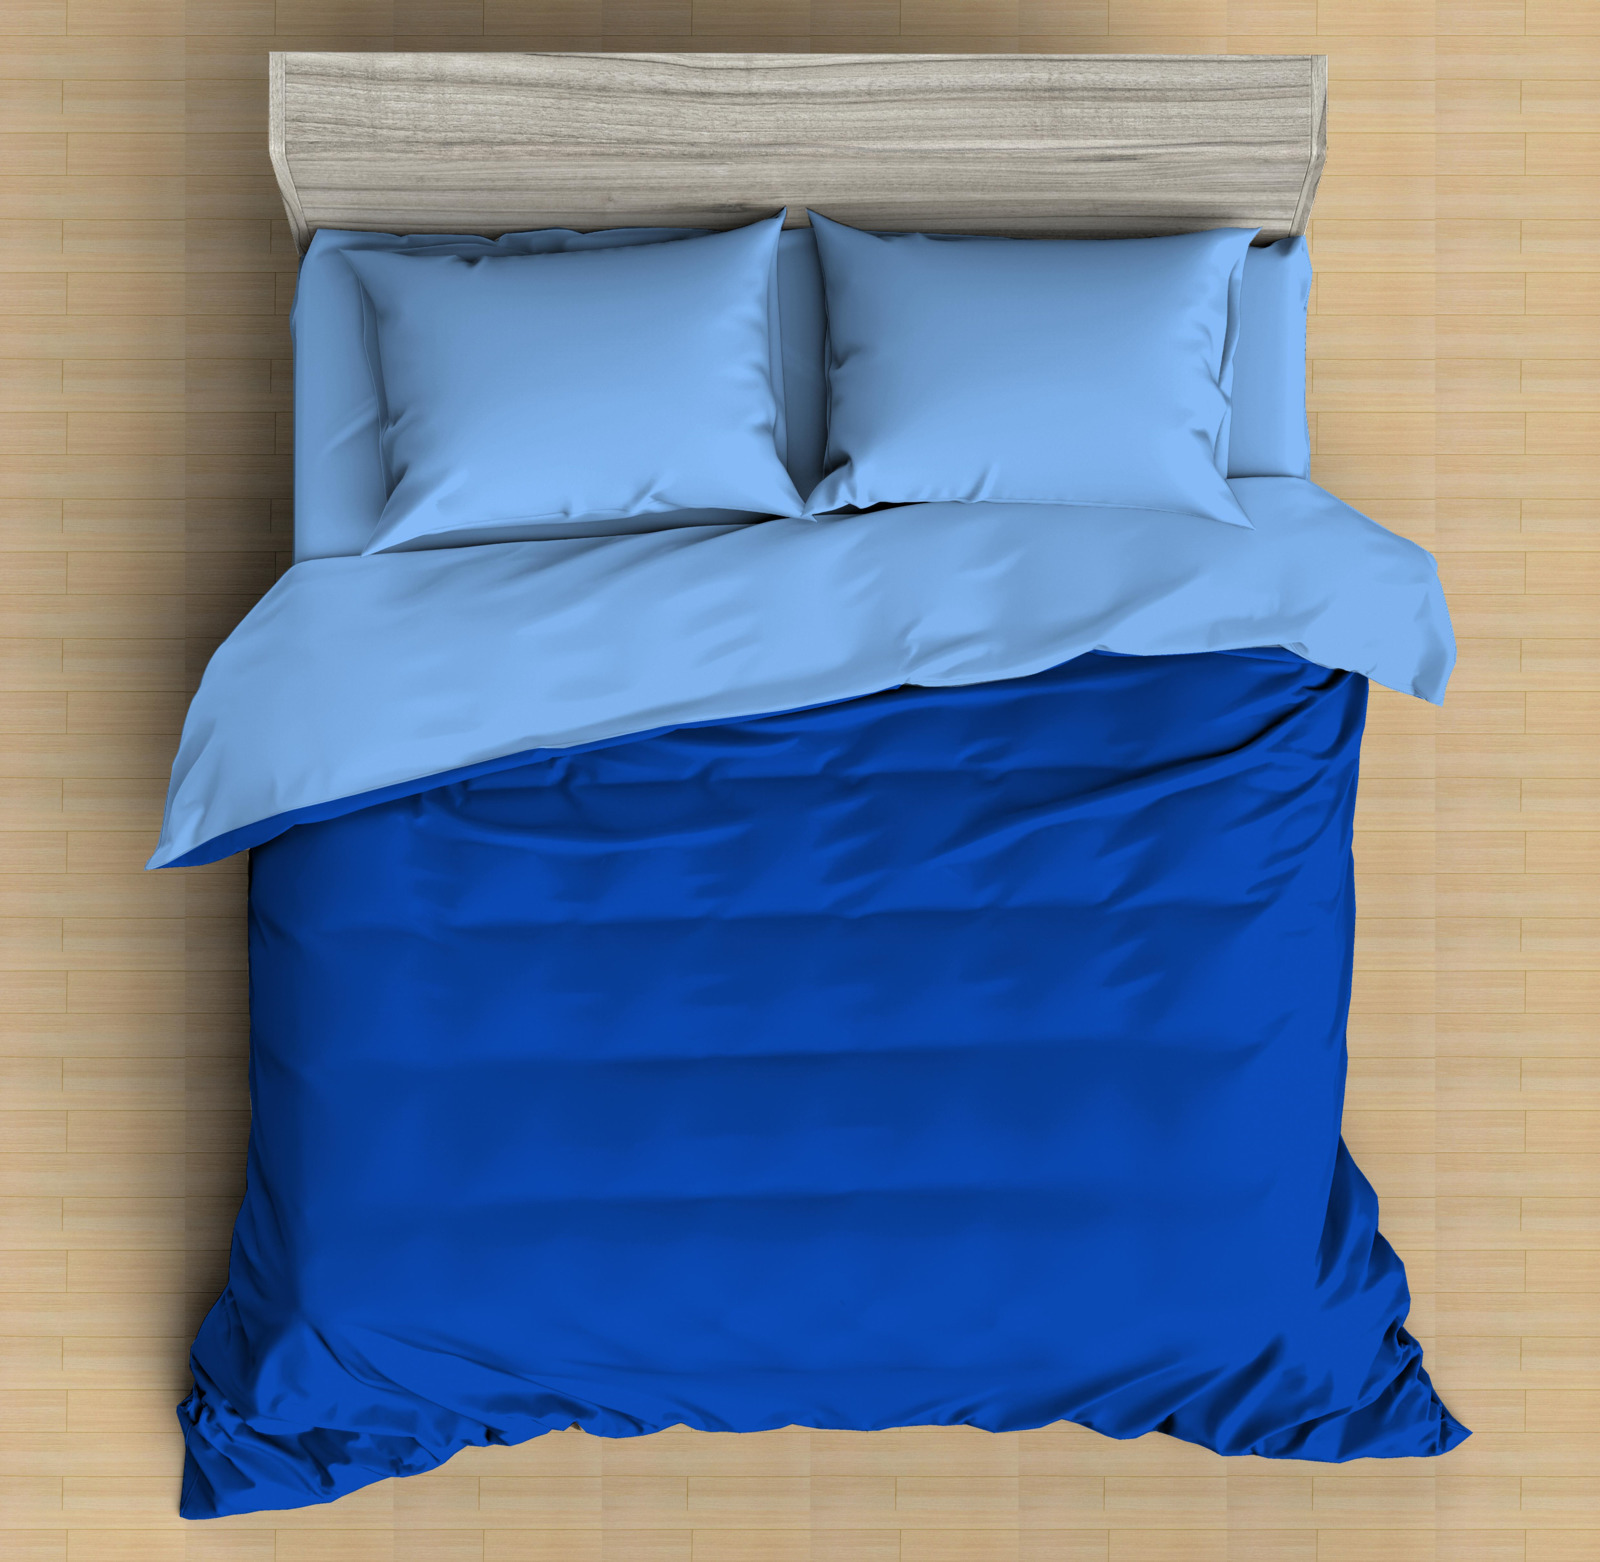 фото Комплект постельного белья Amore Mio Макосатин "Сапфир", 9816, синий, евро, наволочки 70x70